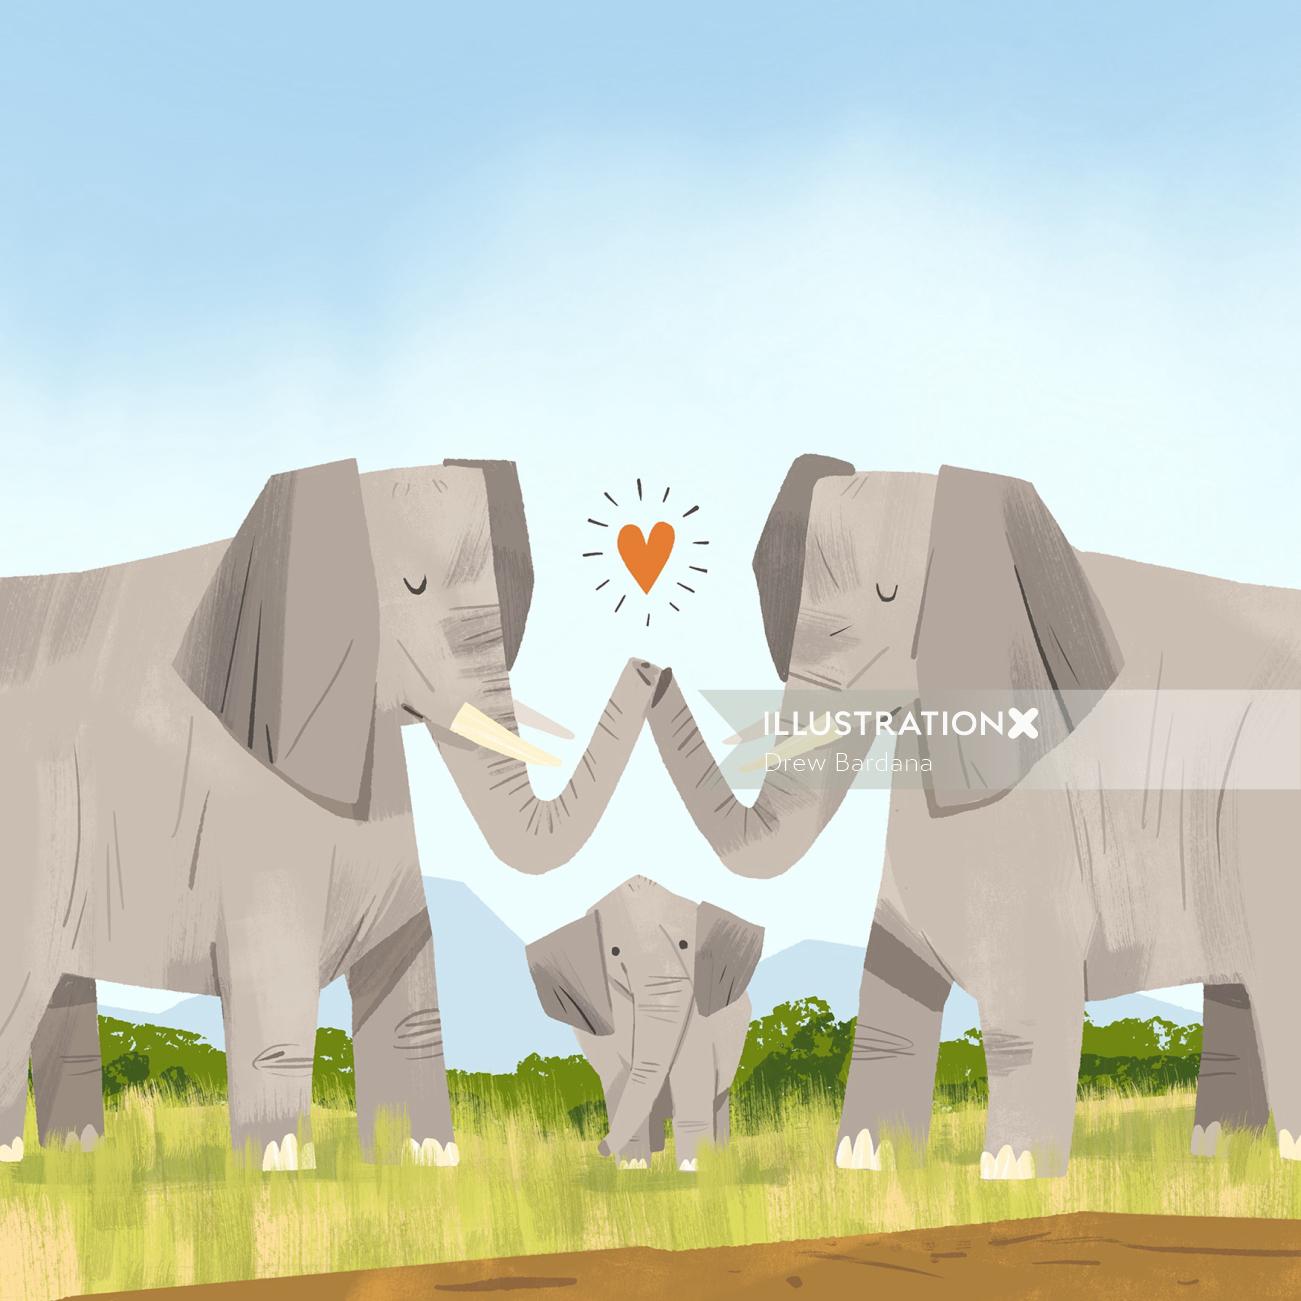 familia de elefantes